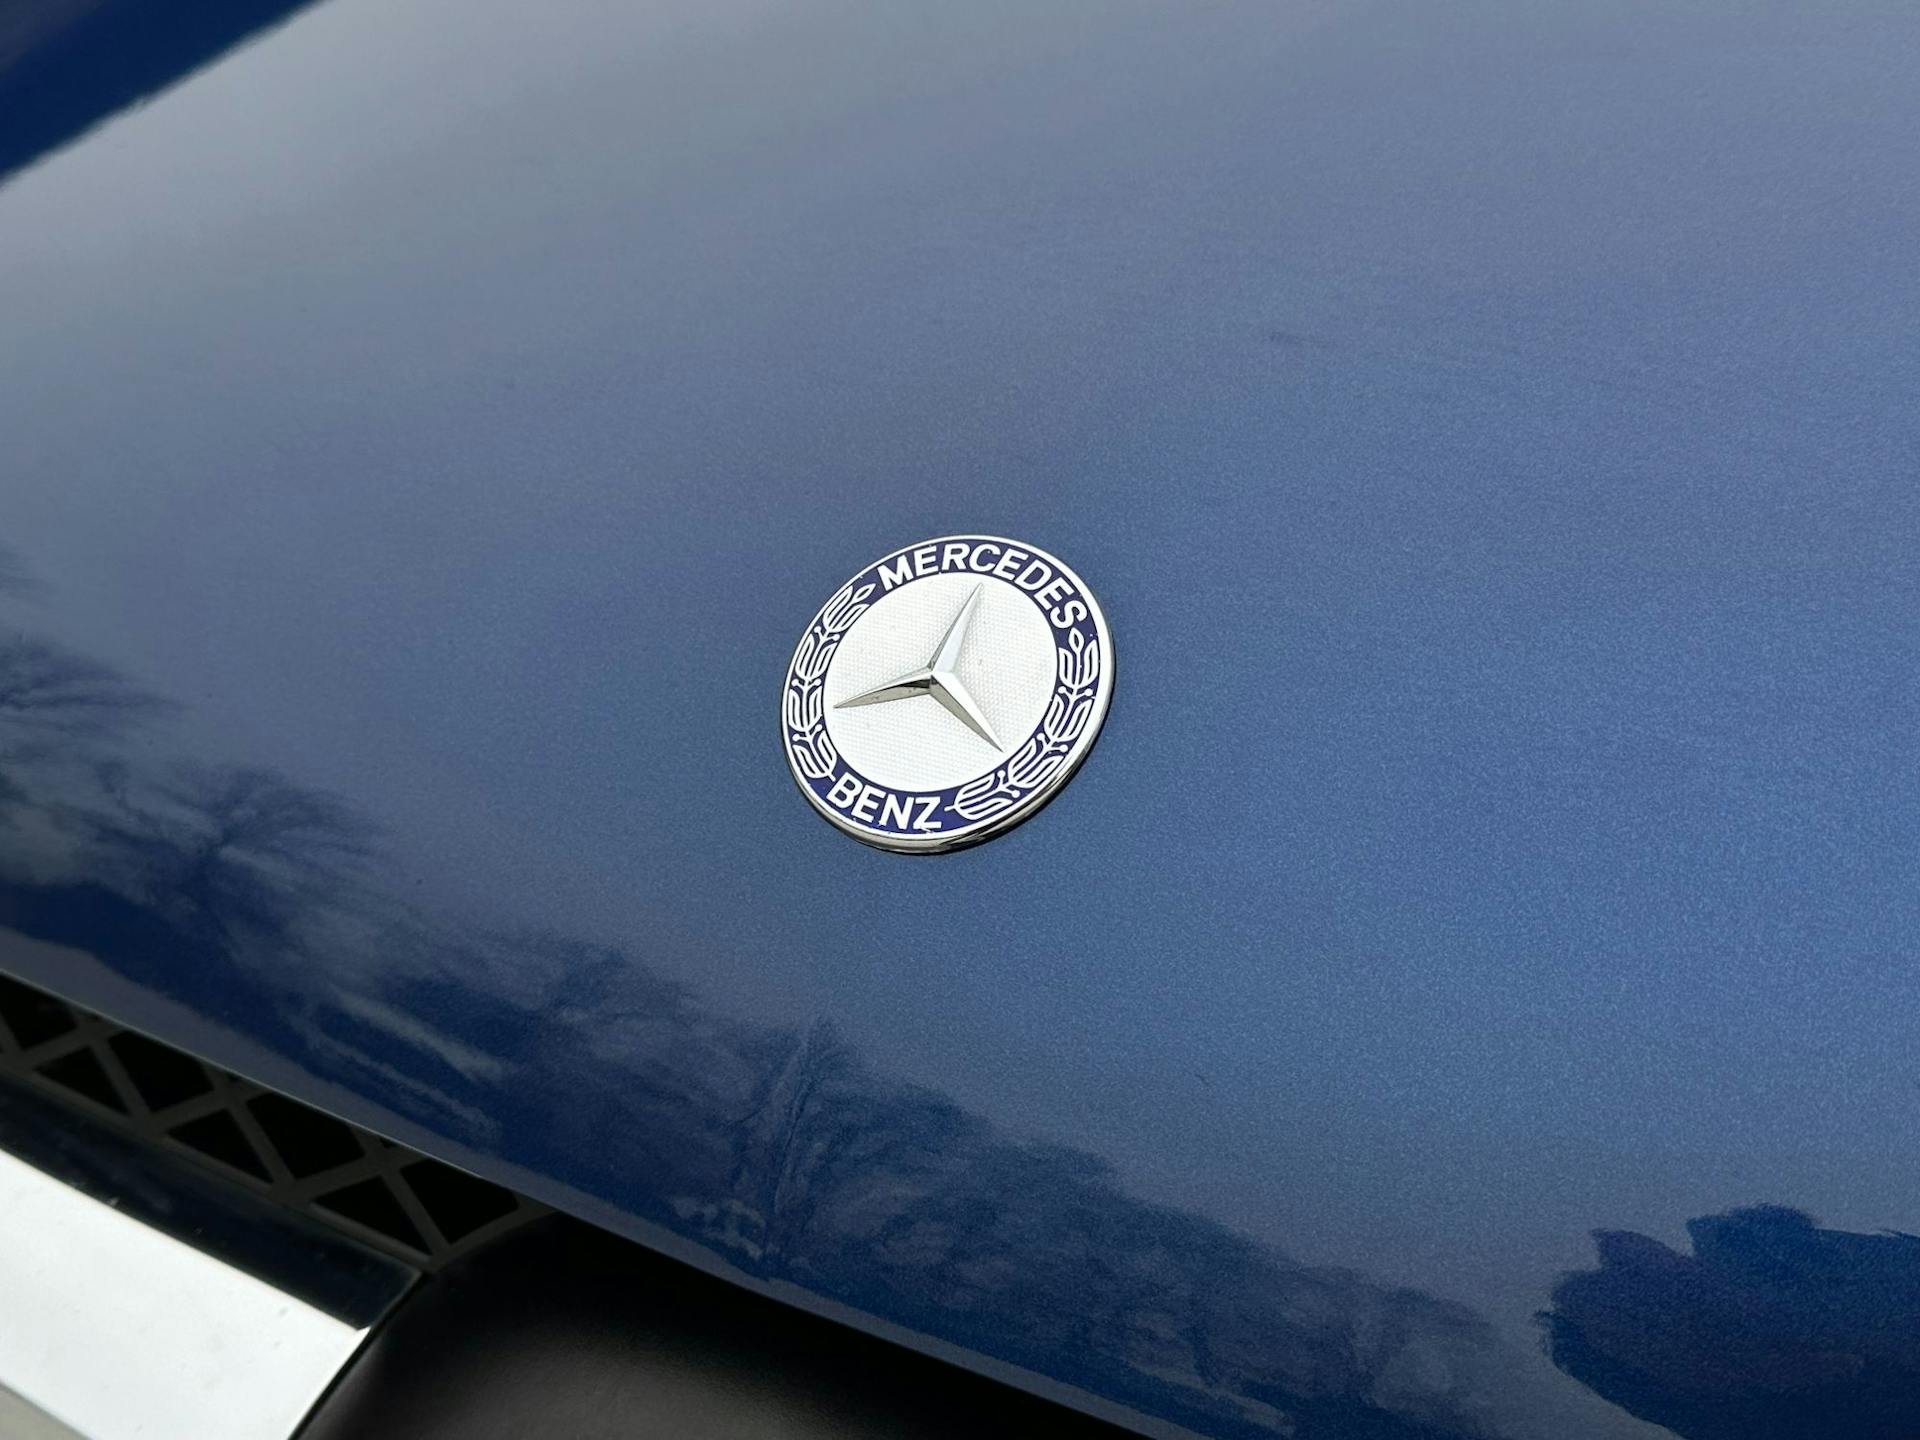 Mercedes-Benz Sprinter 316 2.2 CDI 366 HD DC Trekhaak 3500 kg en Onderhoudshistorie